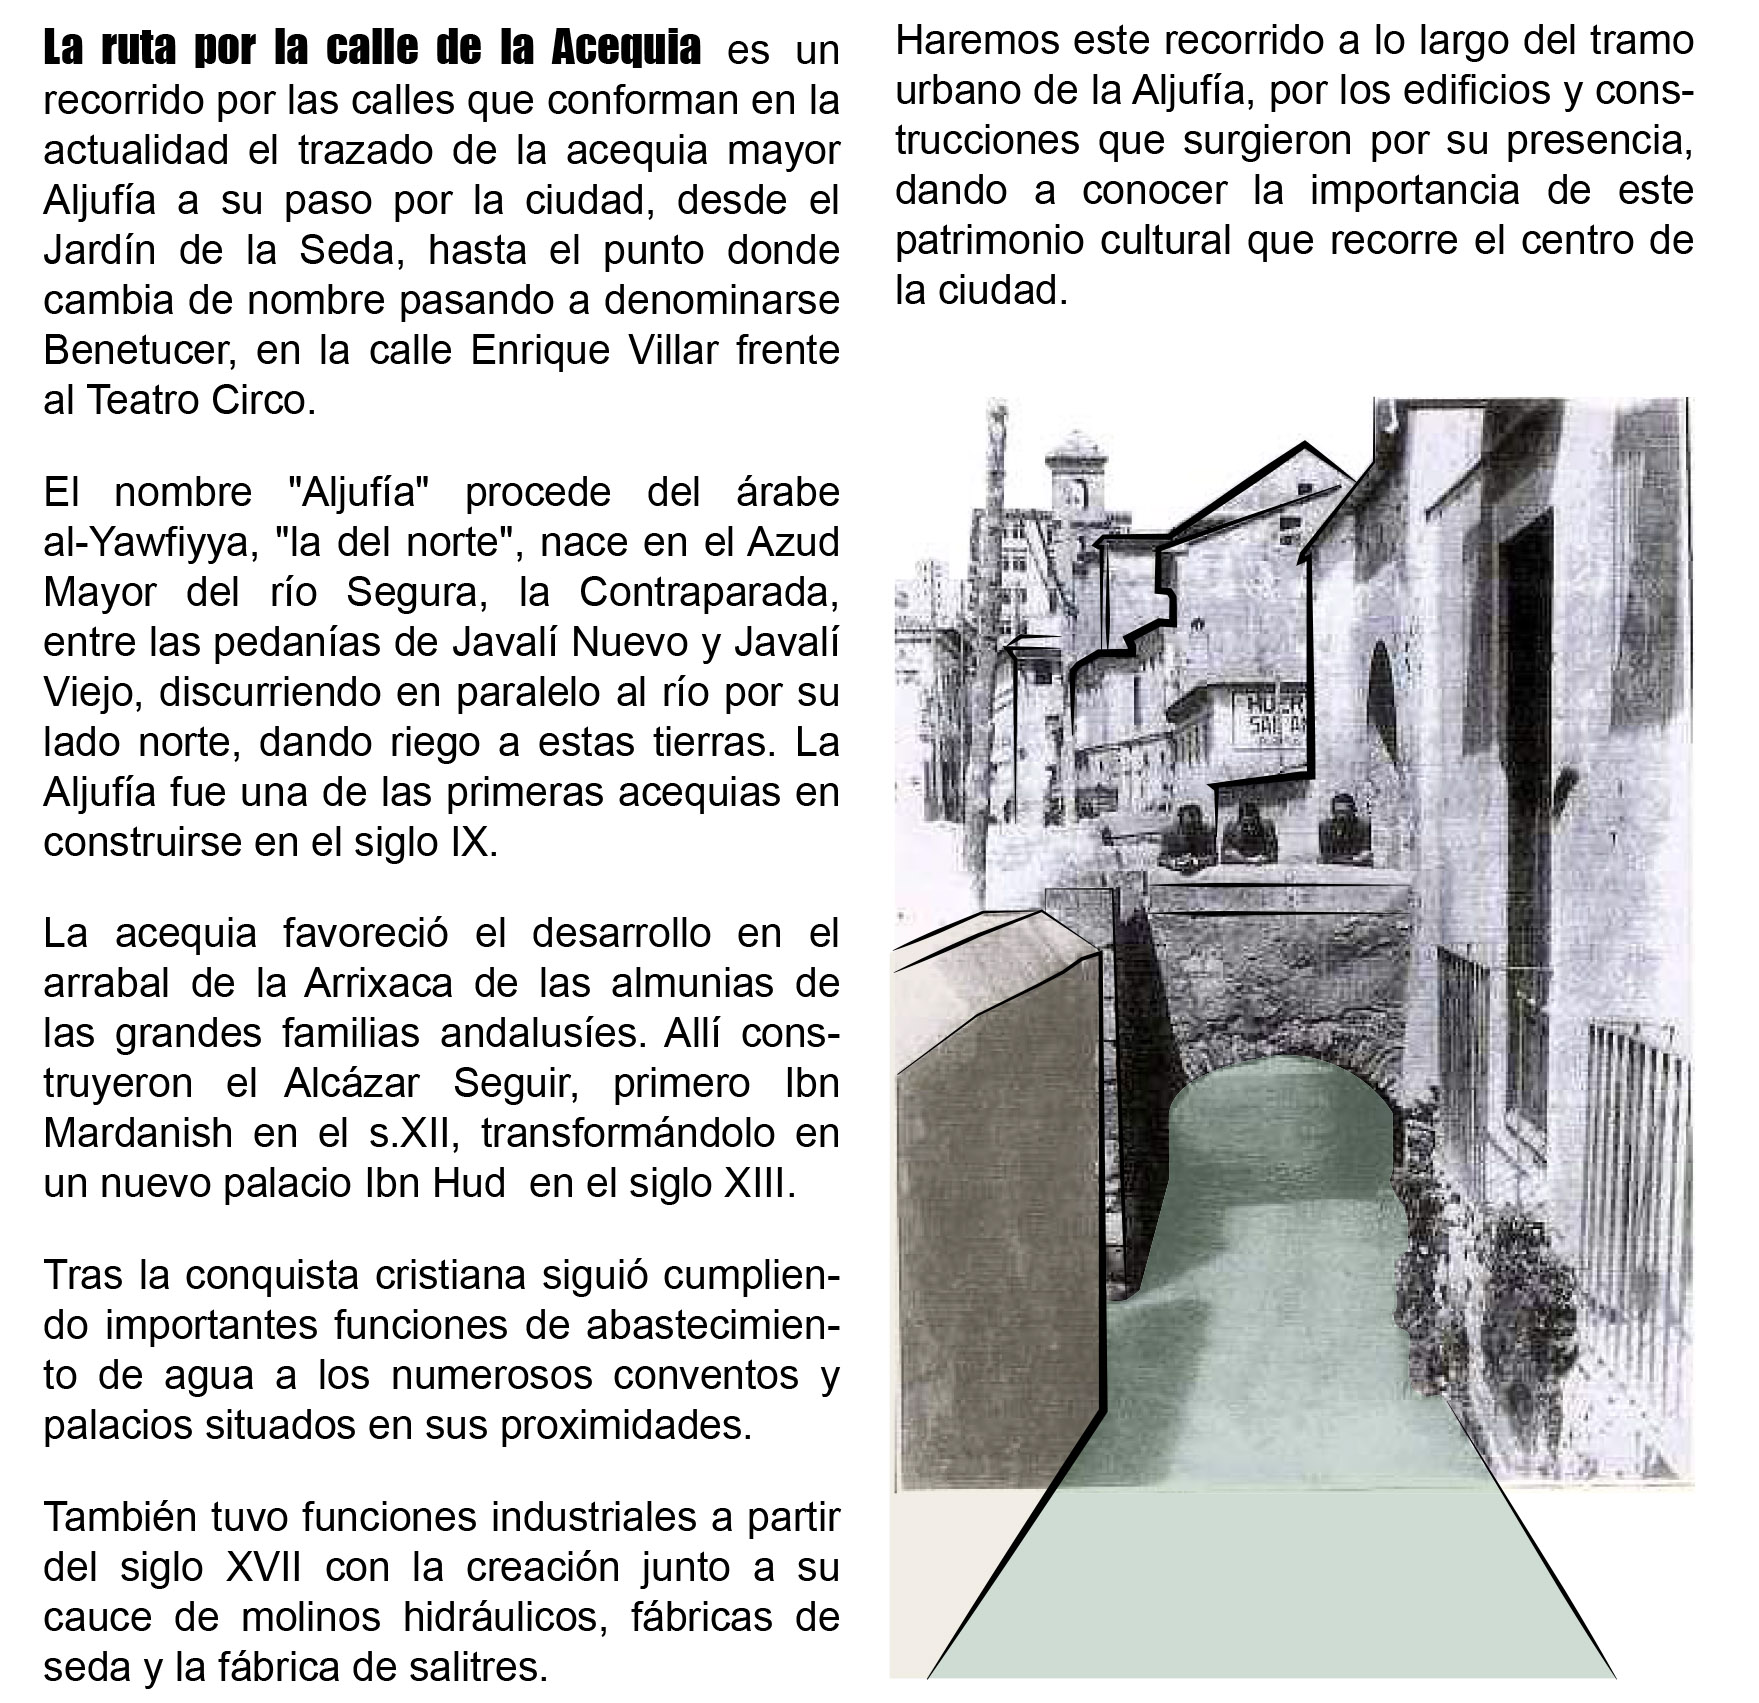 Cultura - Patrimonio - Murcia - Arquitectura de Barrio - La Calle de la Acequia